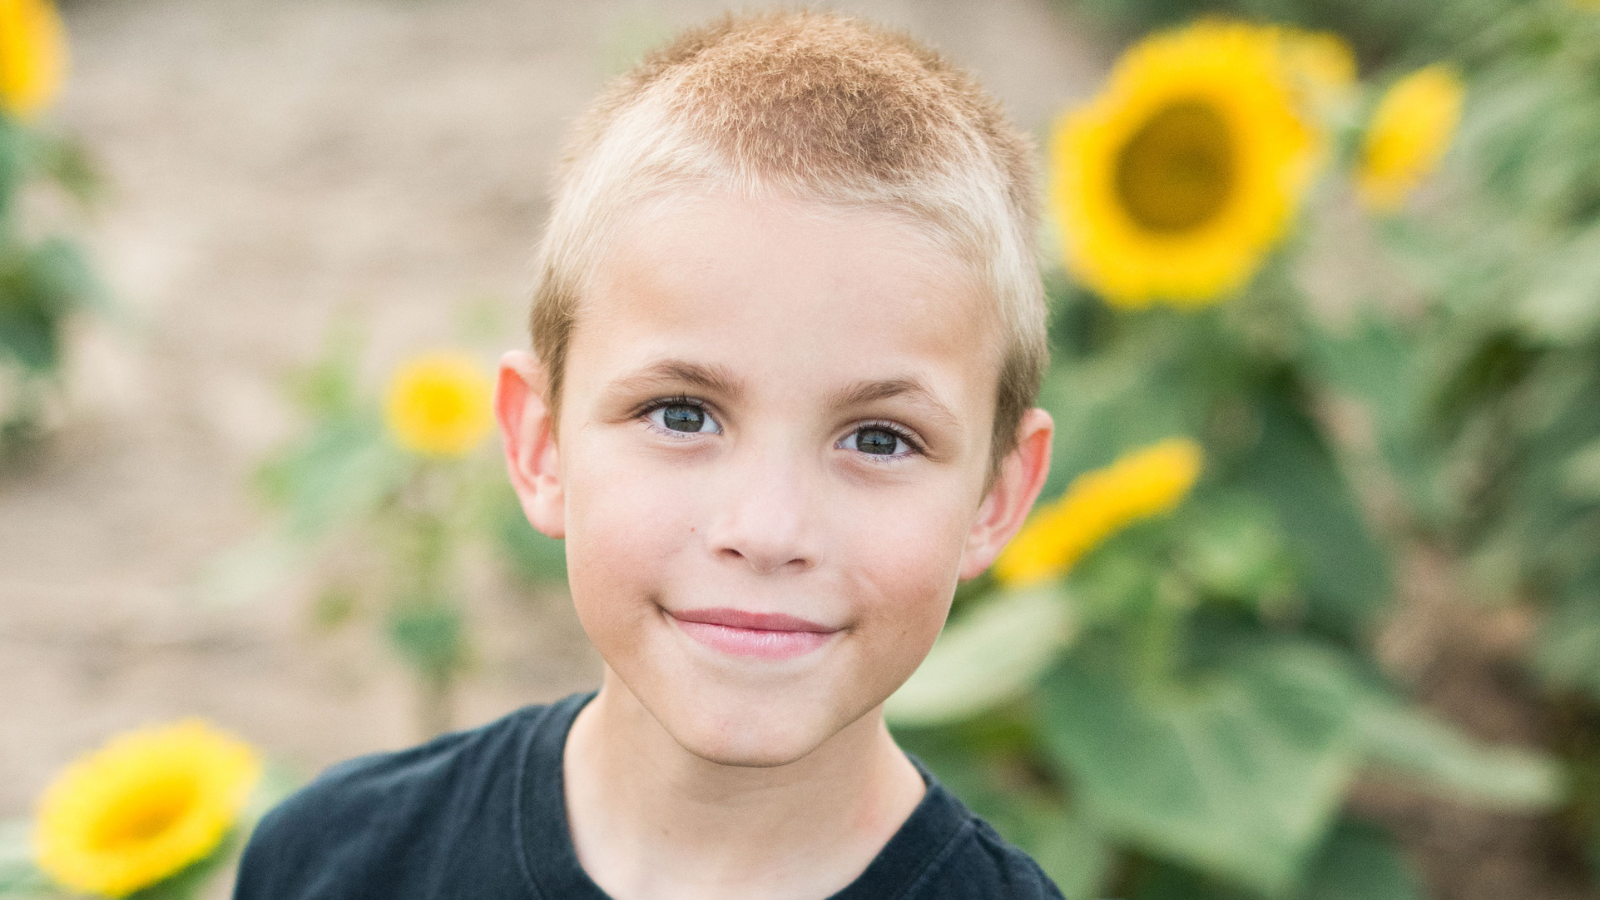 Gillian's son, Matthew, smiling in a field of sunflowers